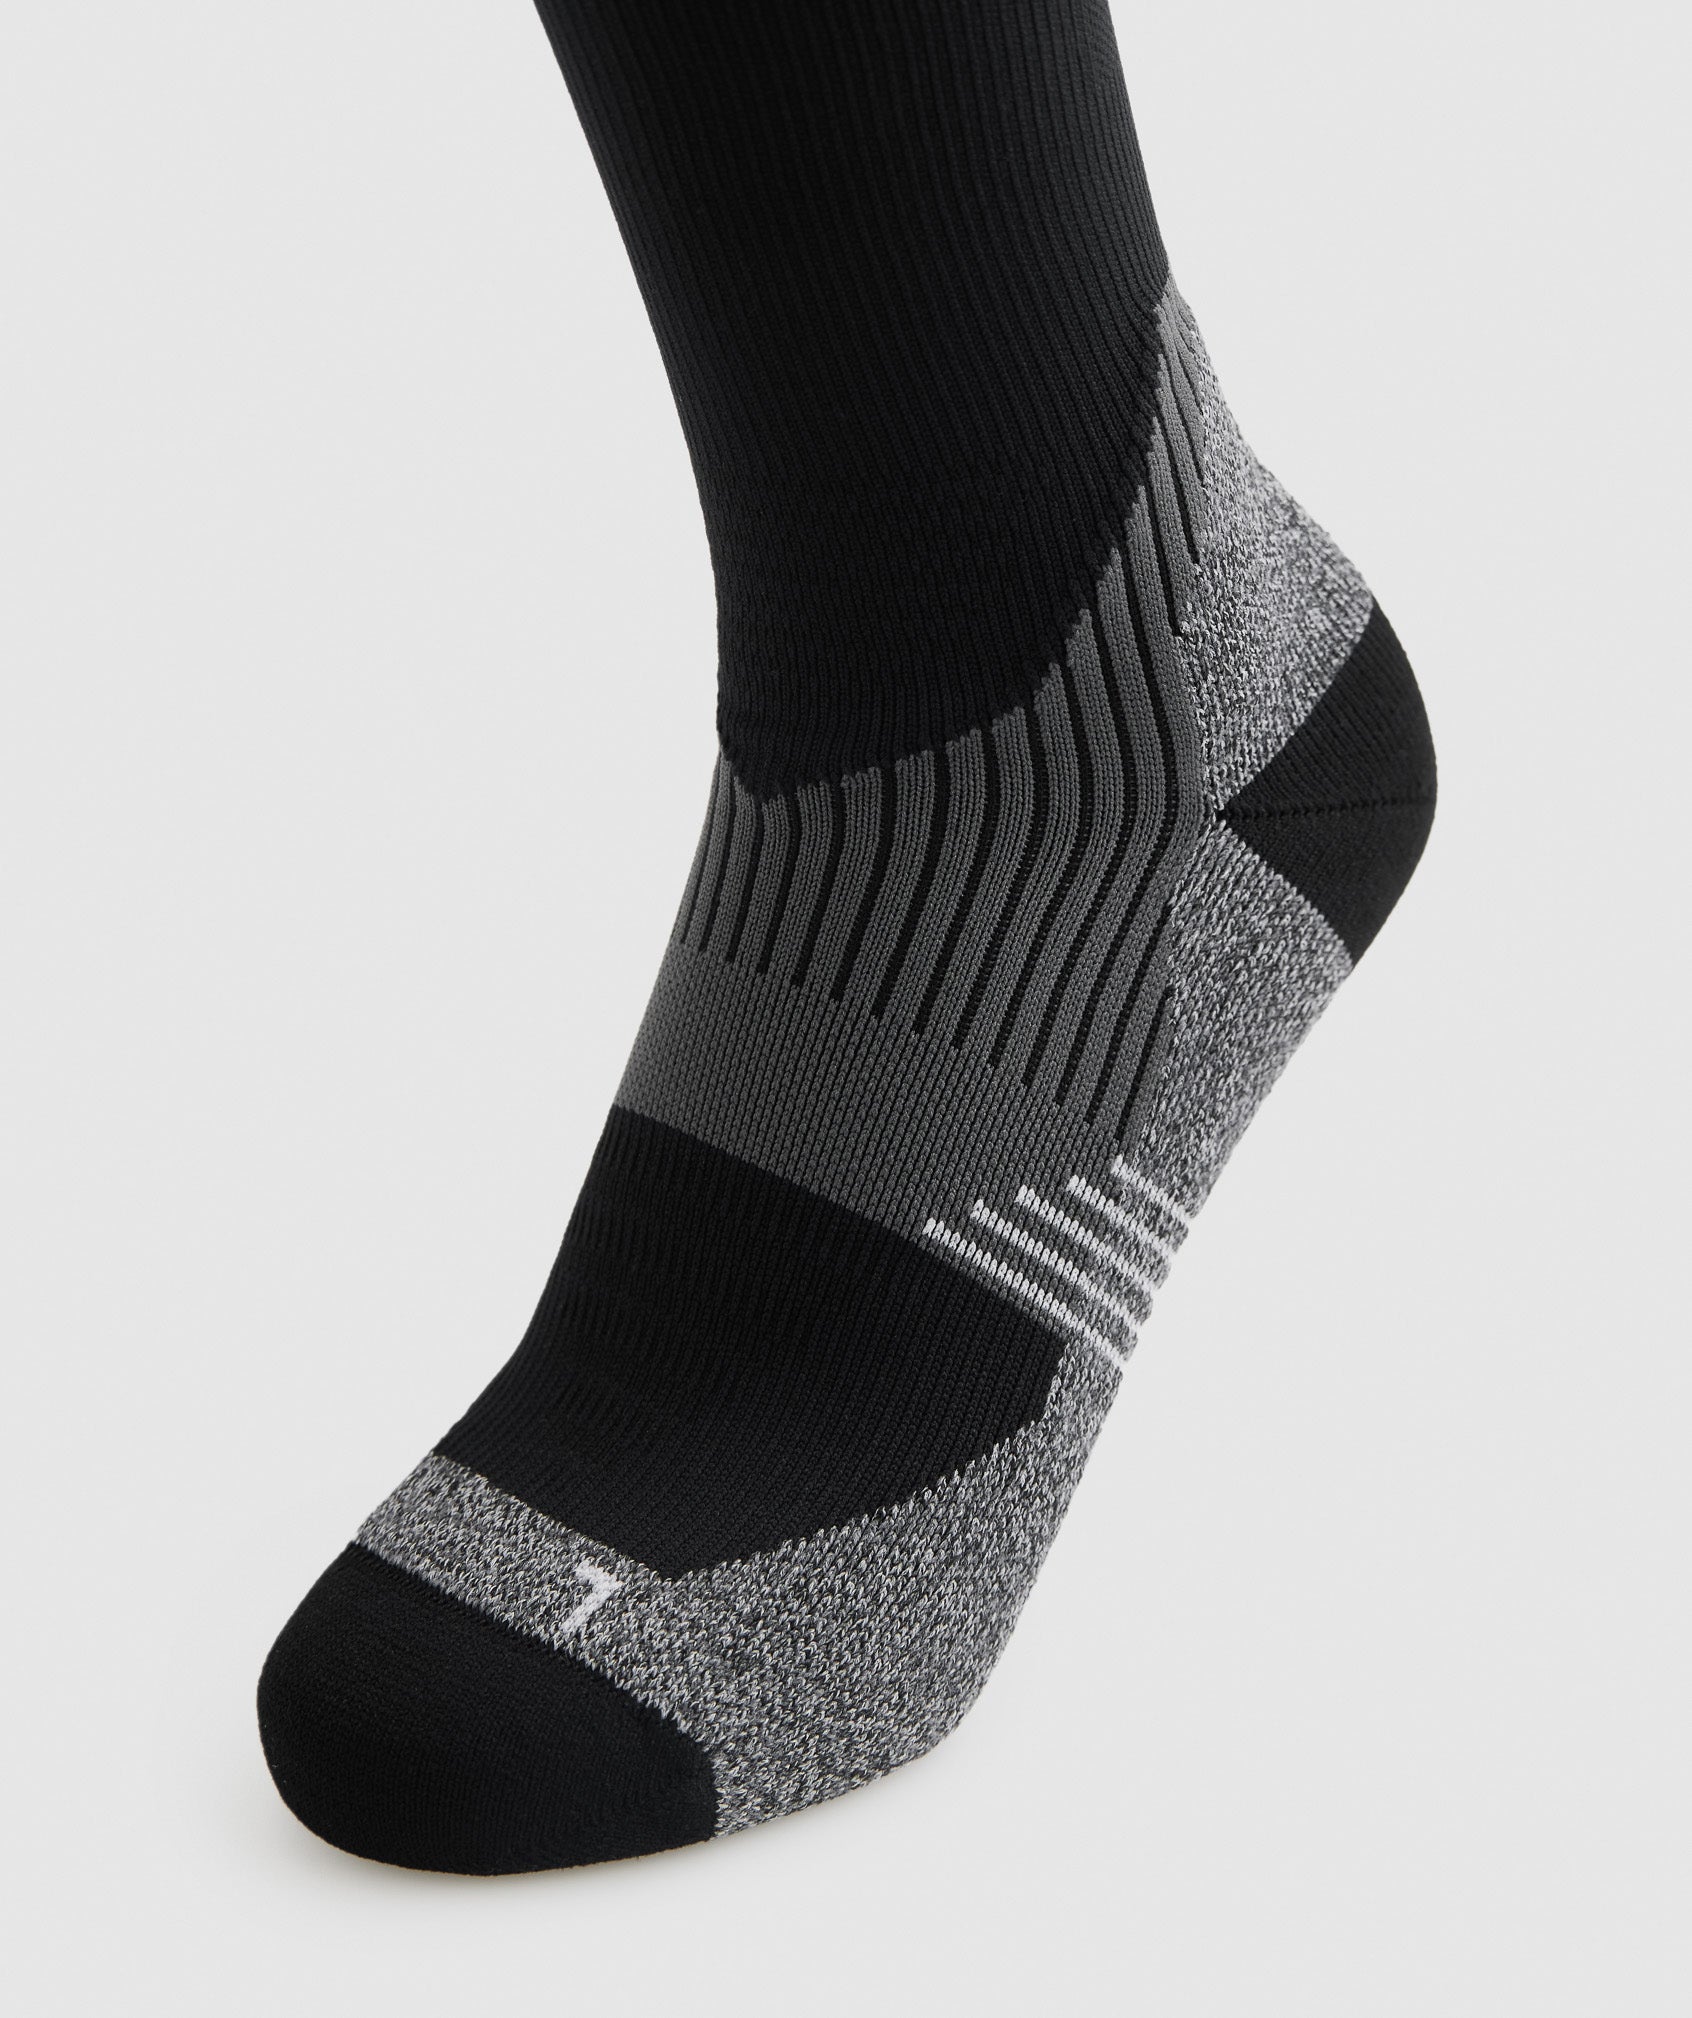 Long Performance Socks in Black